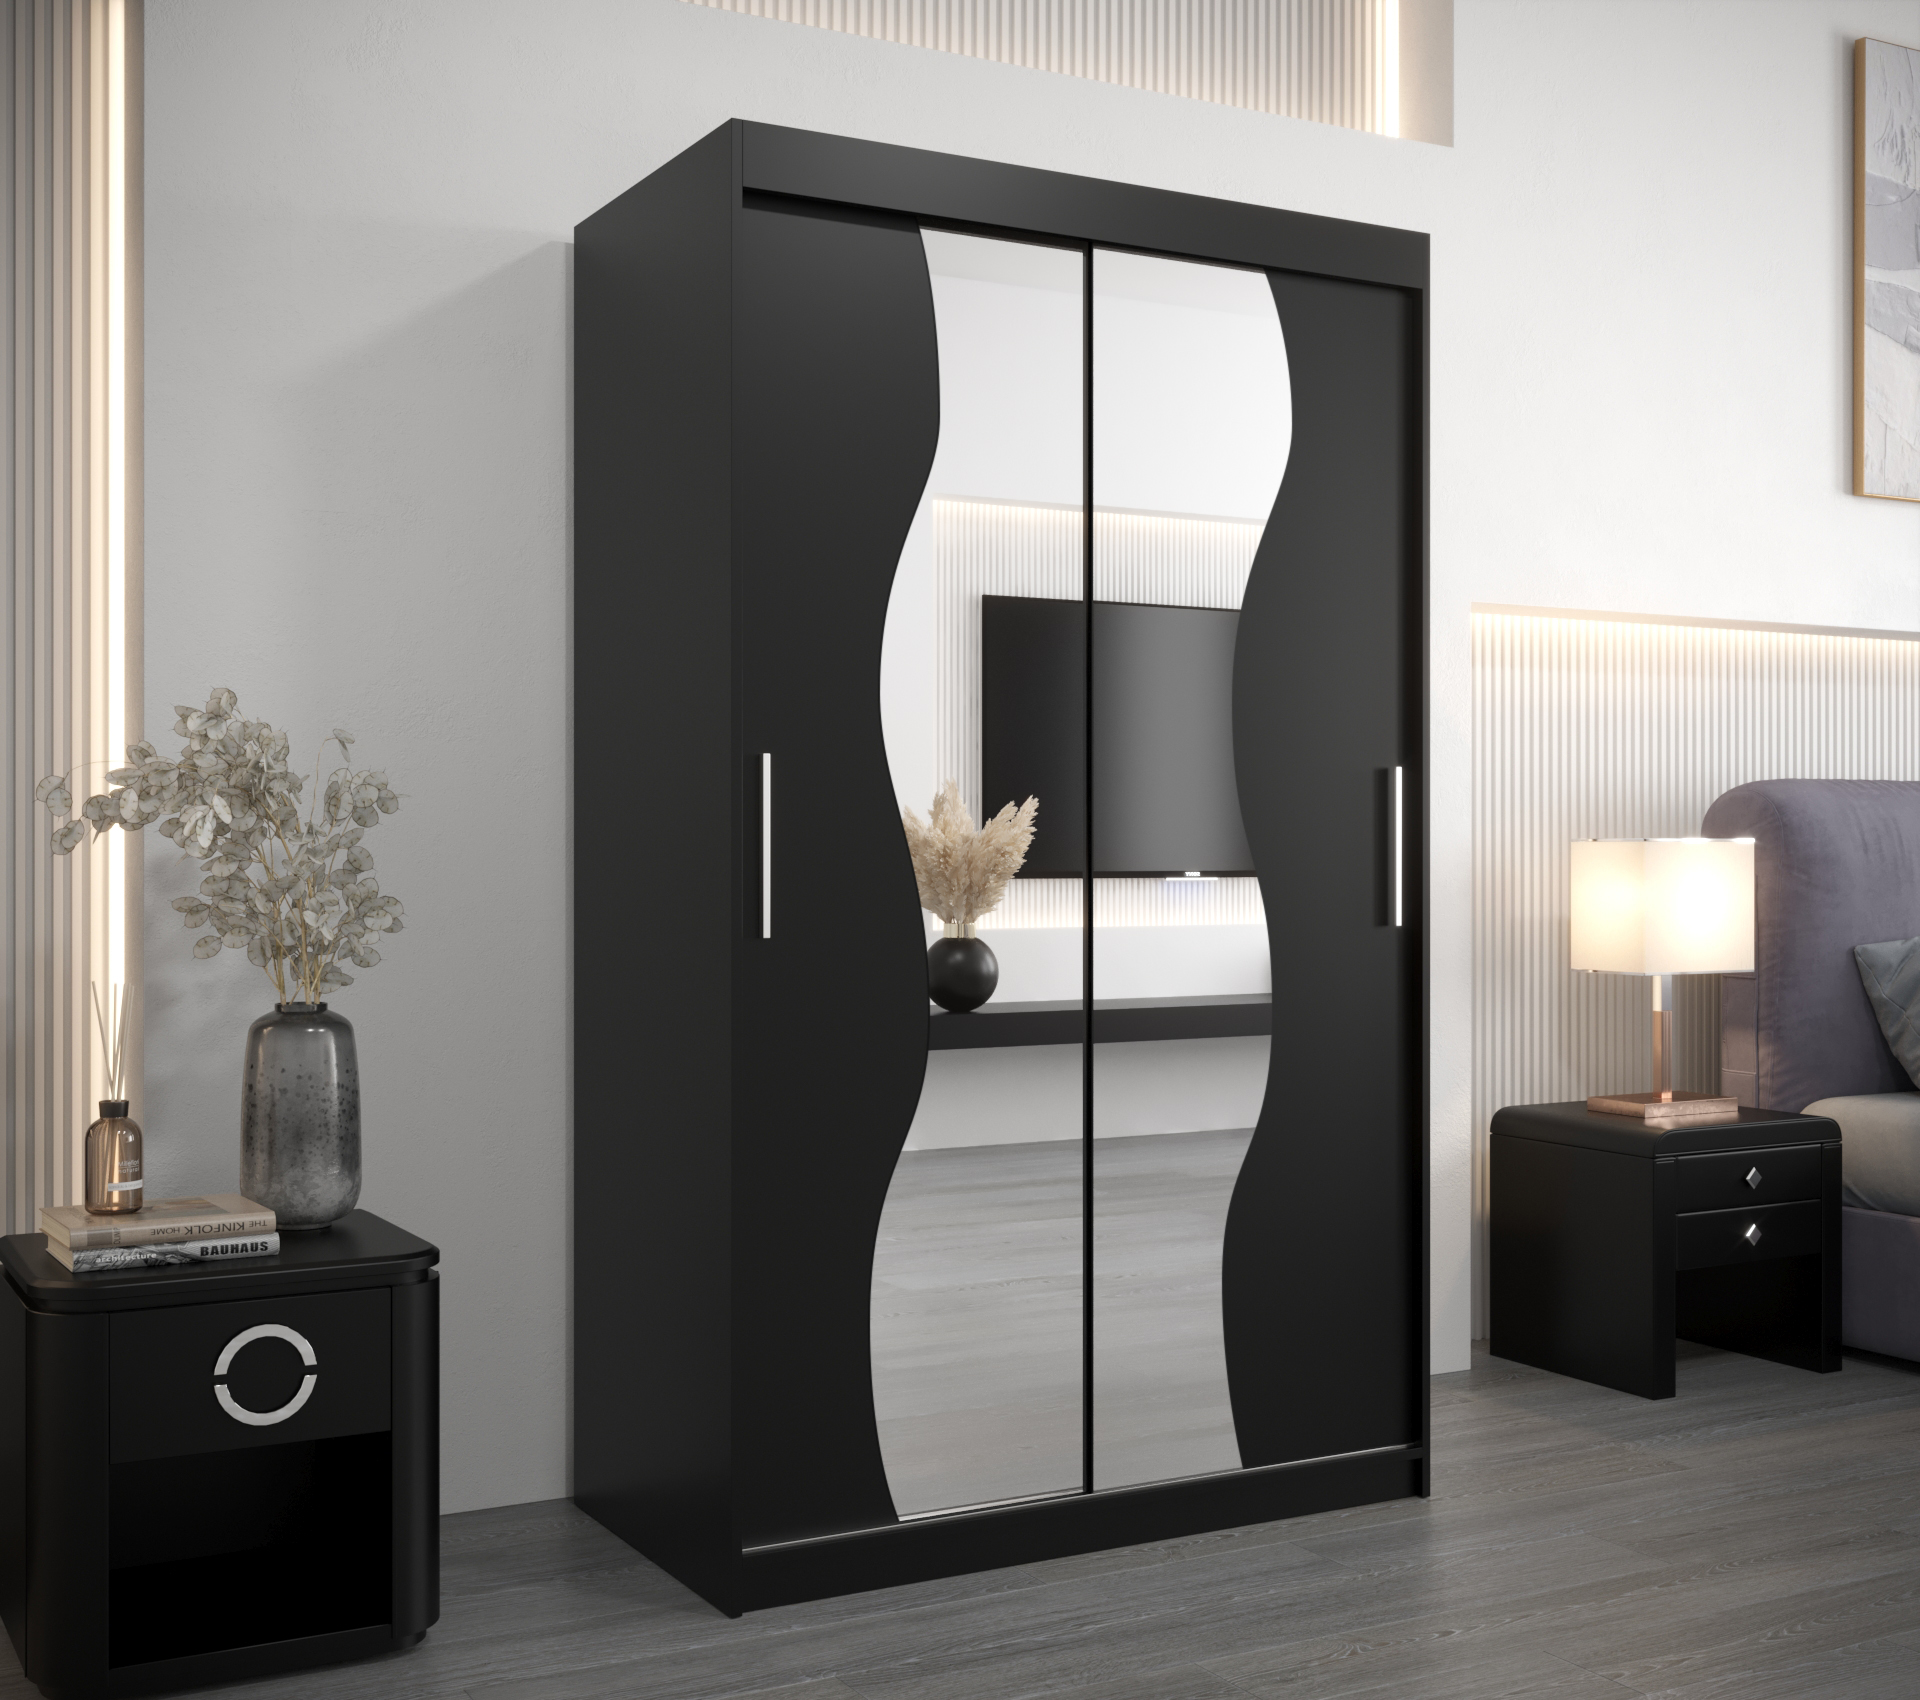 Šatní skříň Abi Mr Dveře: Černá, Rozměr: 120 cm, Korpus: Černá - Černá,Černá